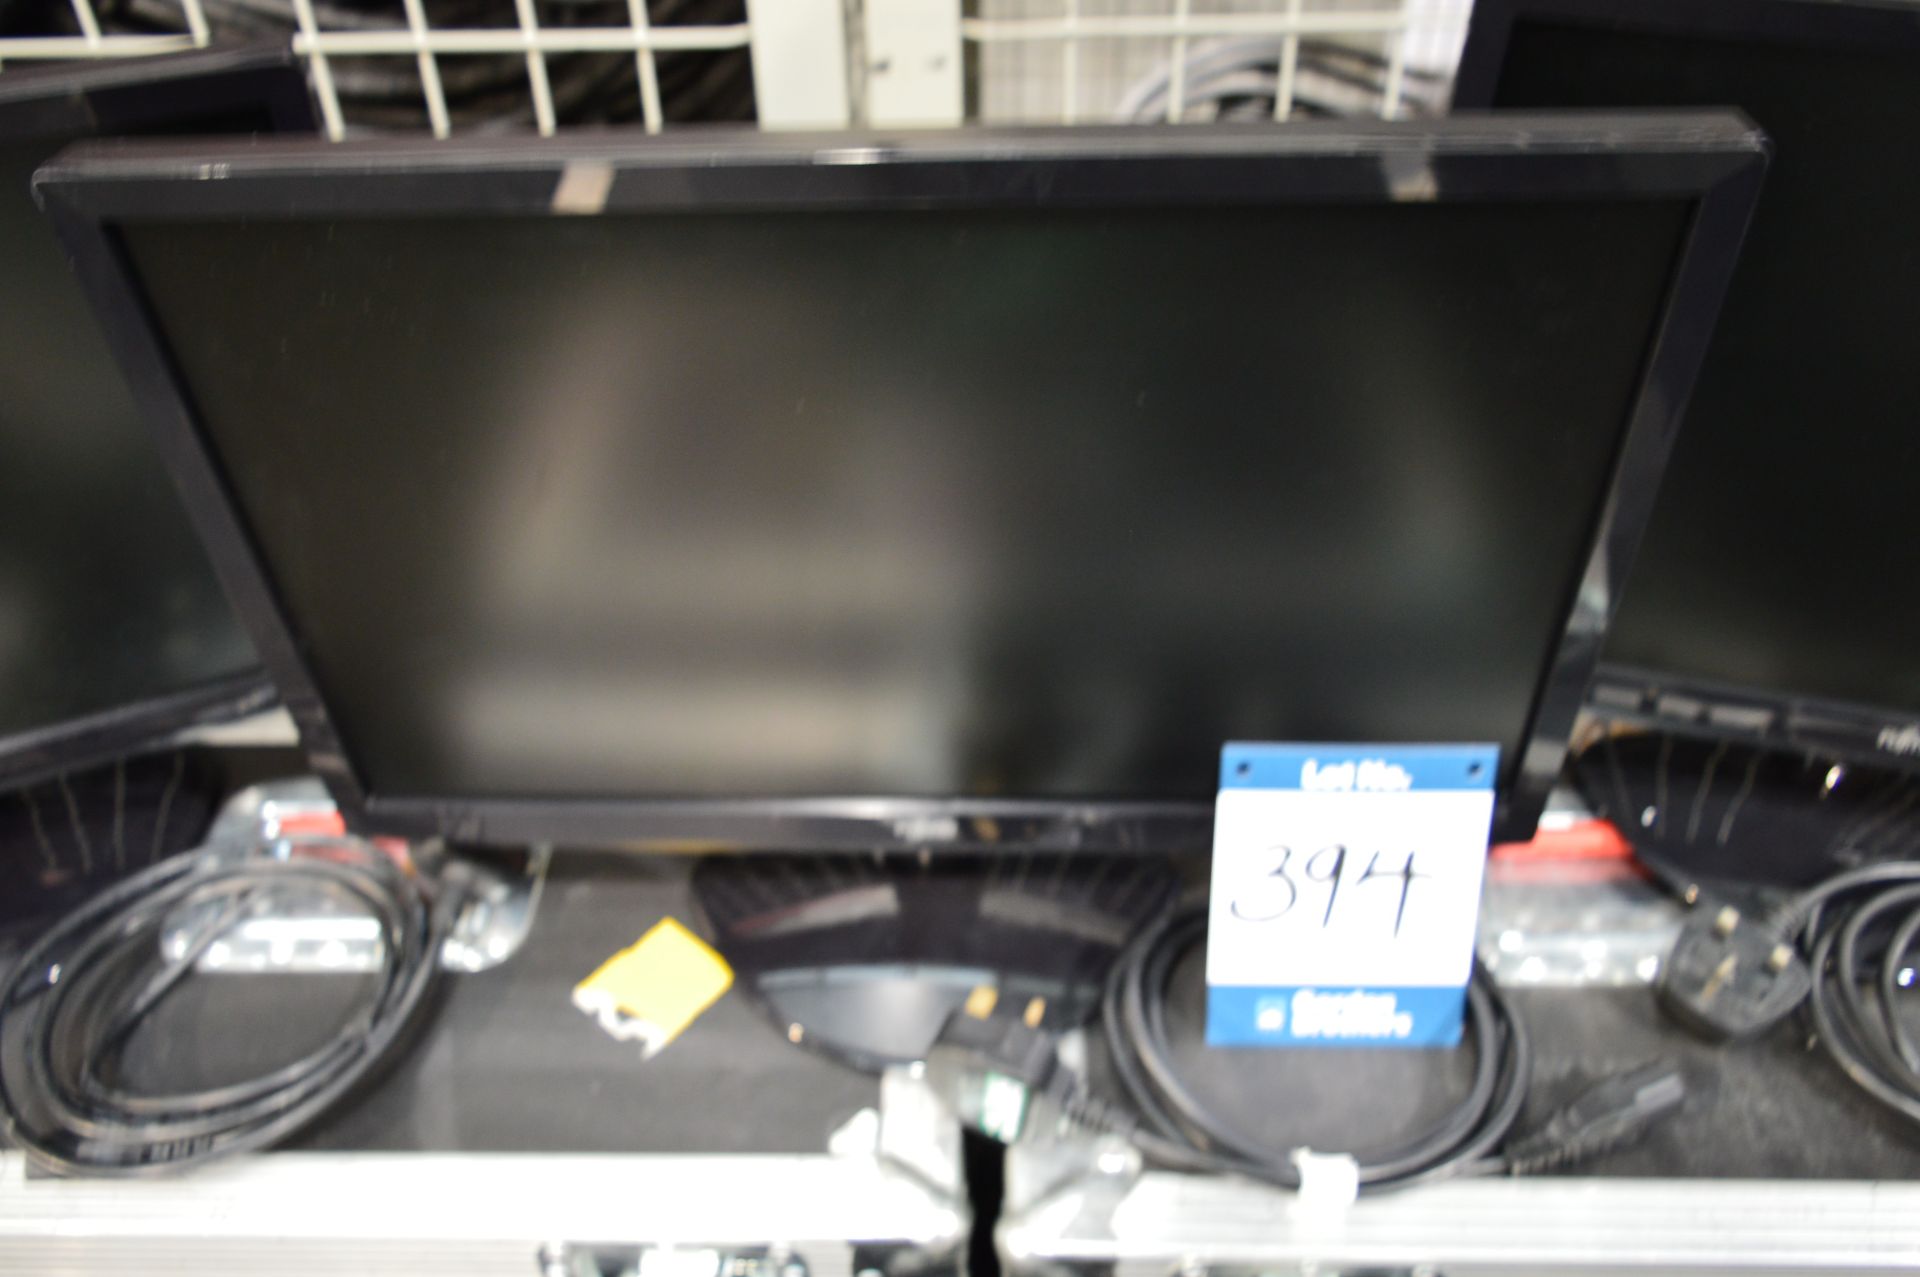 3x No. Fujitsu, L20T-3 LCD monitors each with powe